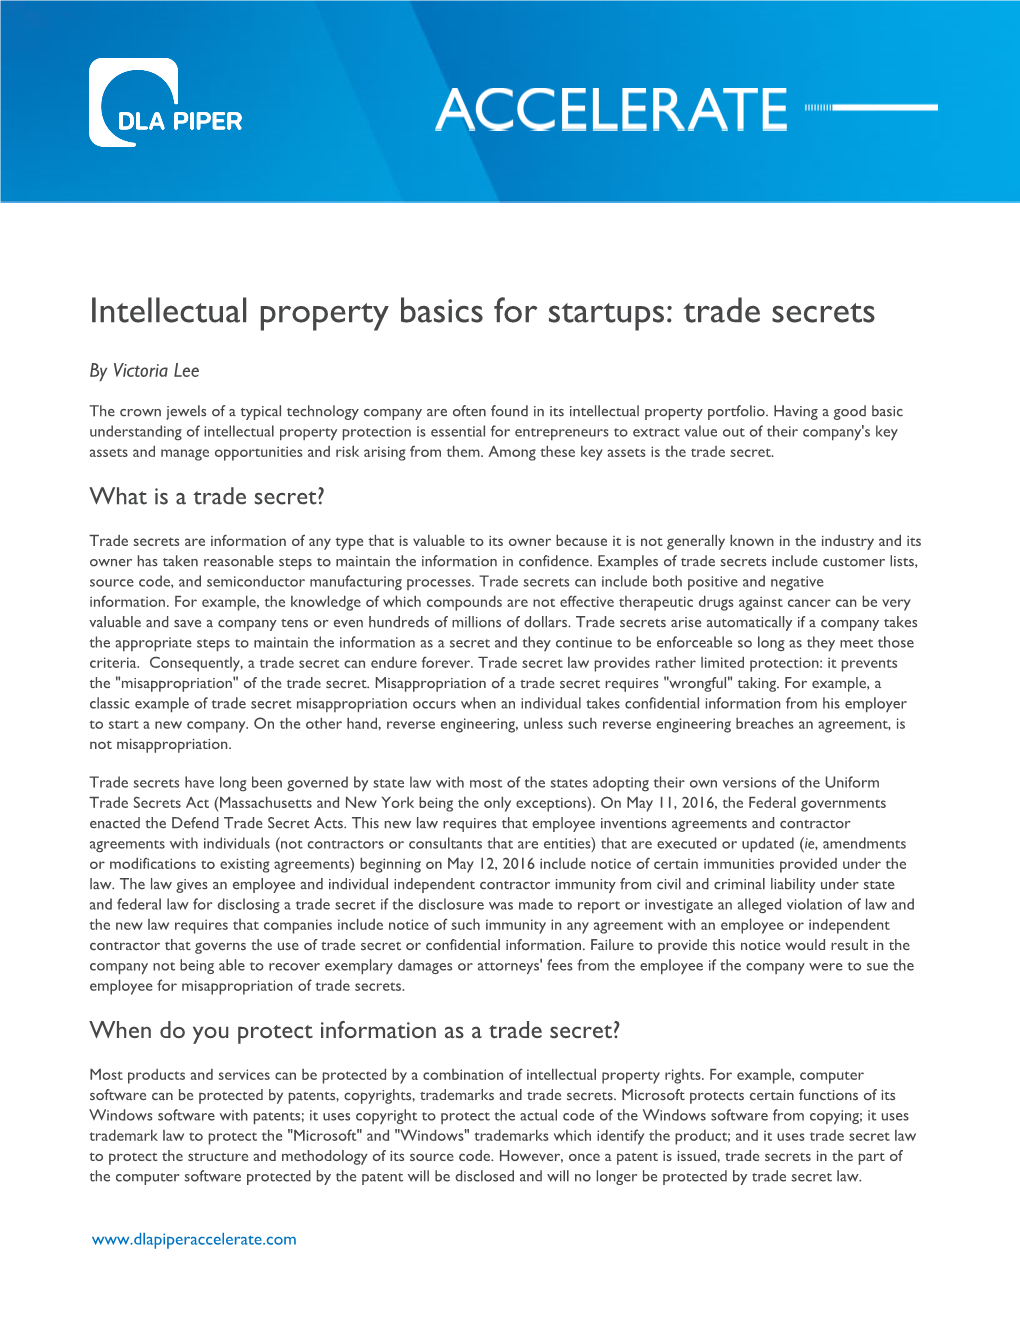 Intellectual Property Basics for Startups: Trade Secrets